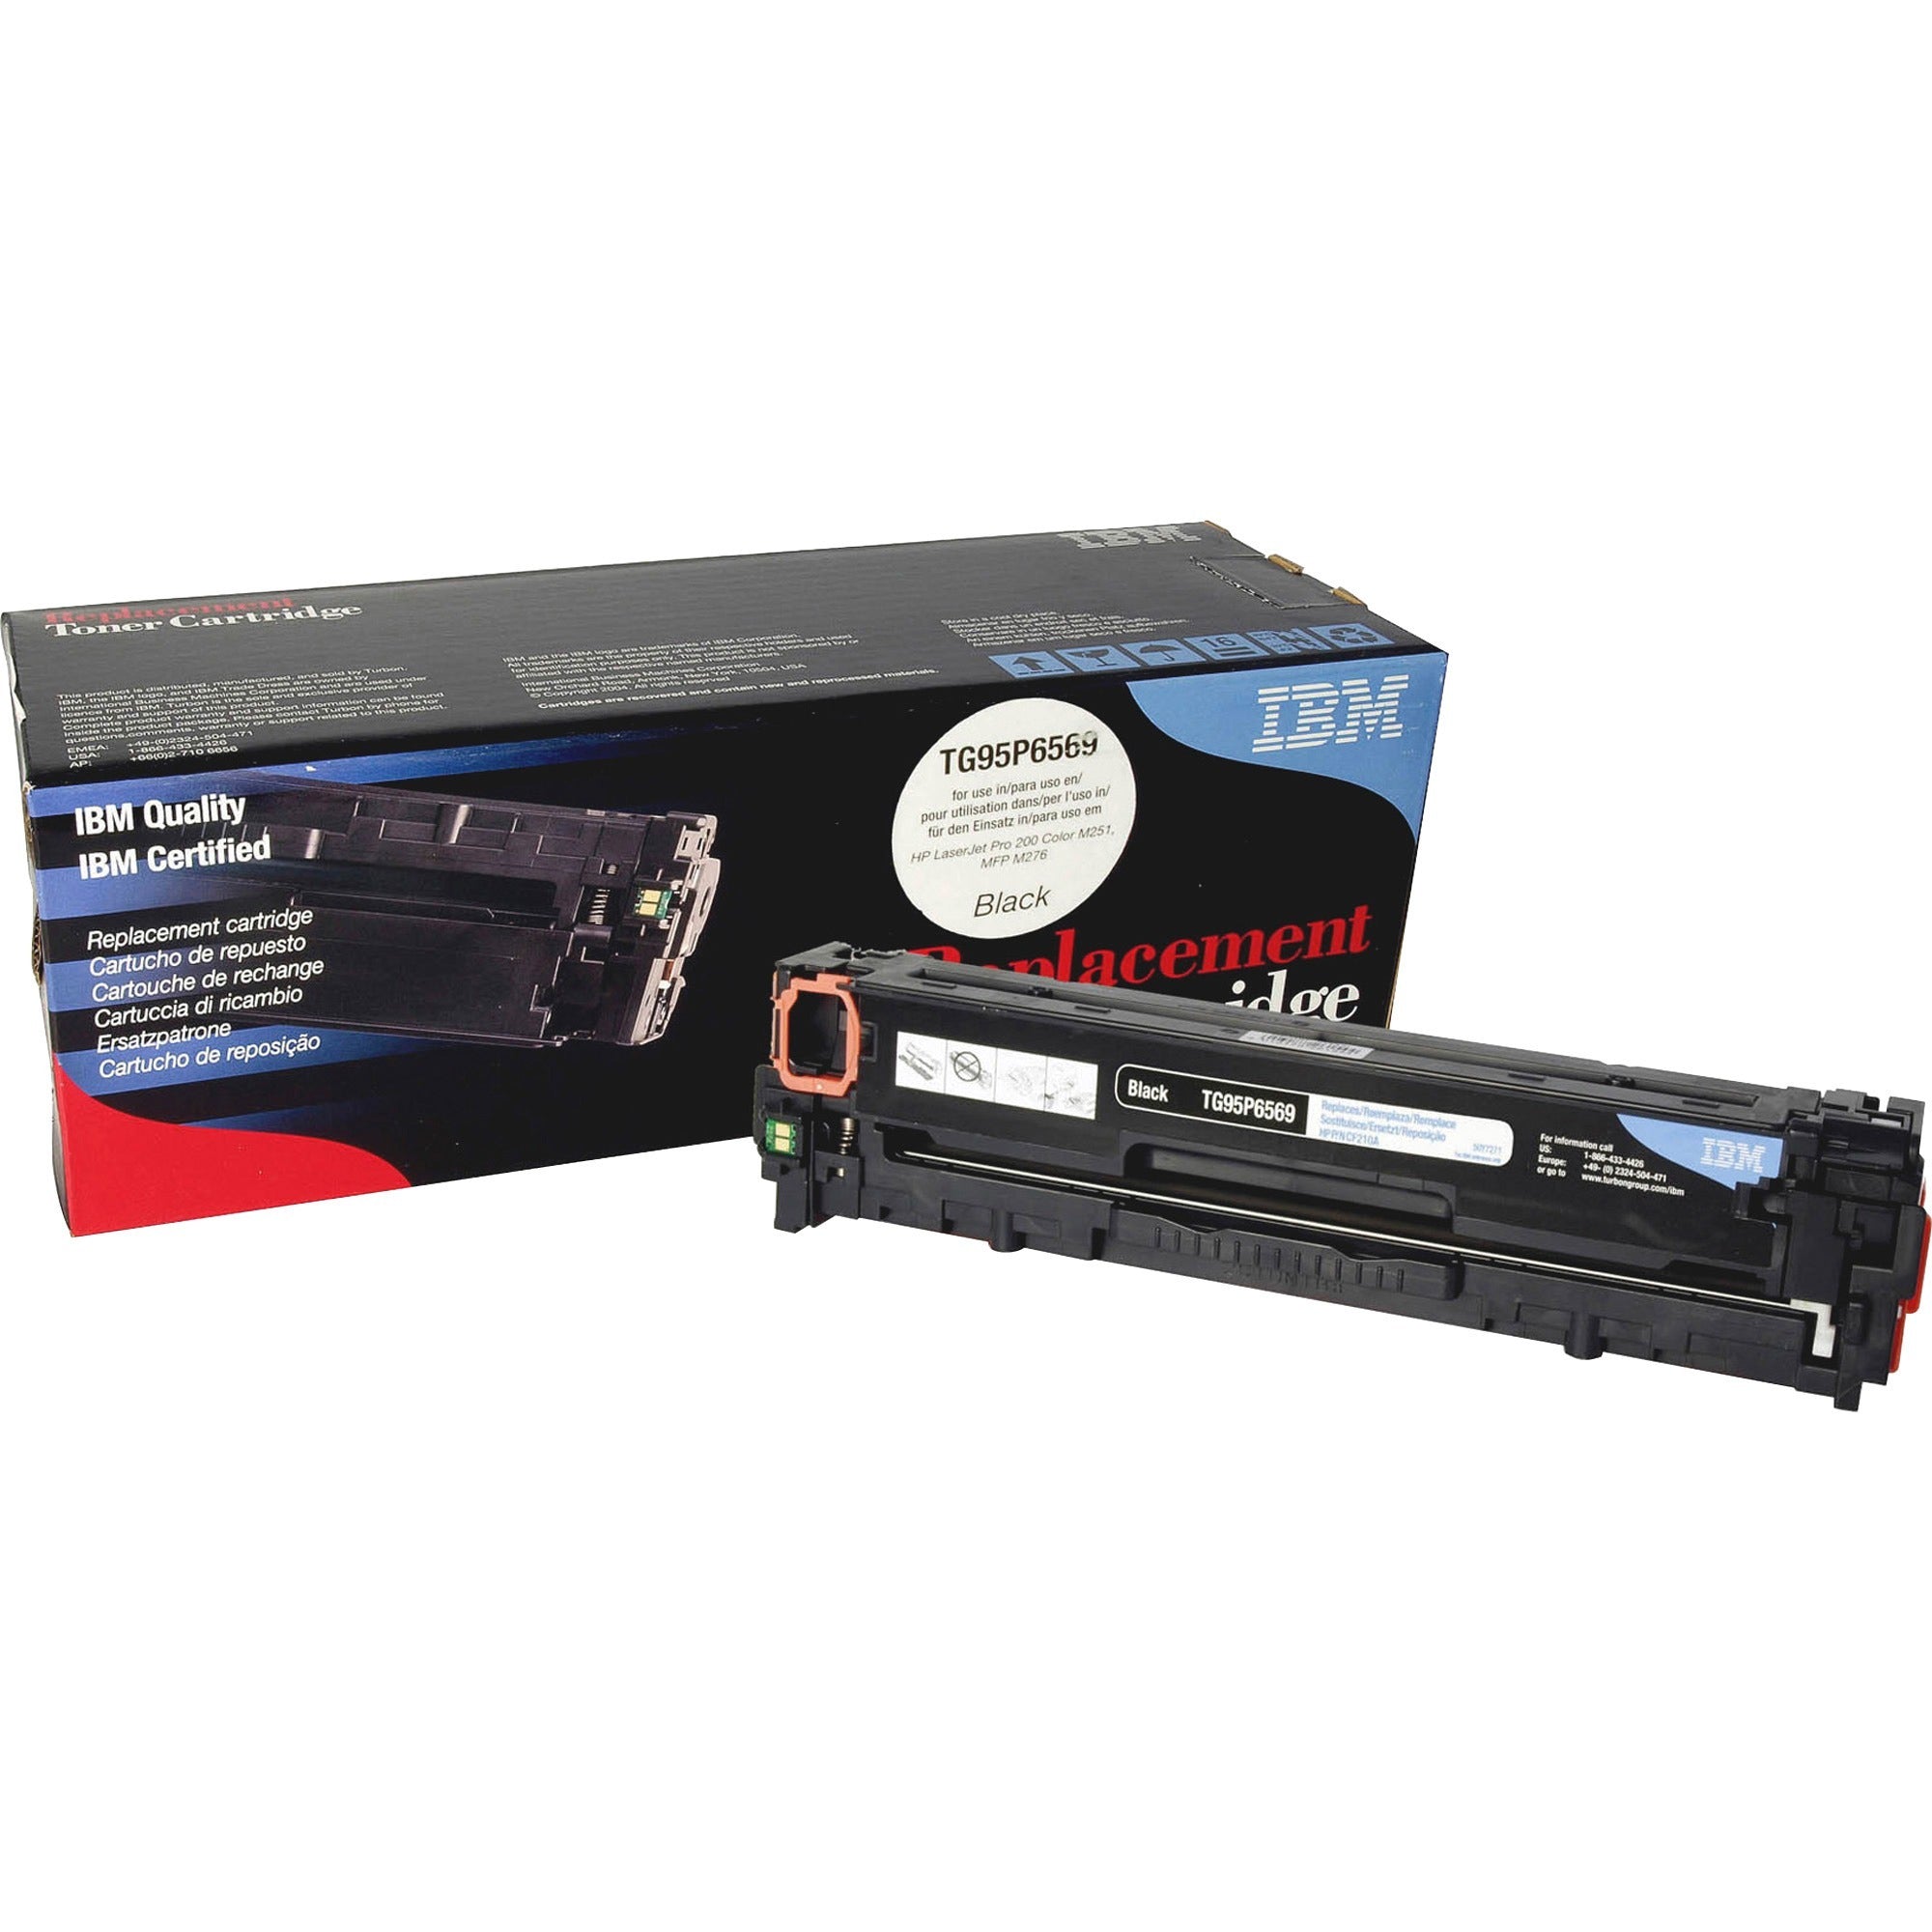 IBM Remanufactured Laser Toner Cartridge - Alternative for HP 131A (CF210A) - Black - 1 Each - 1600 Pages - 